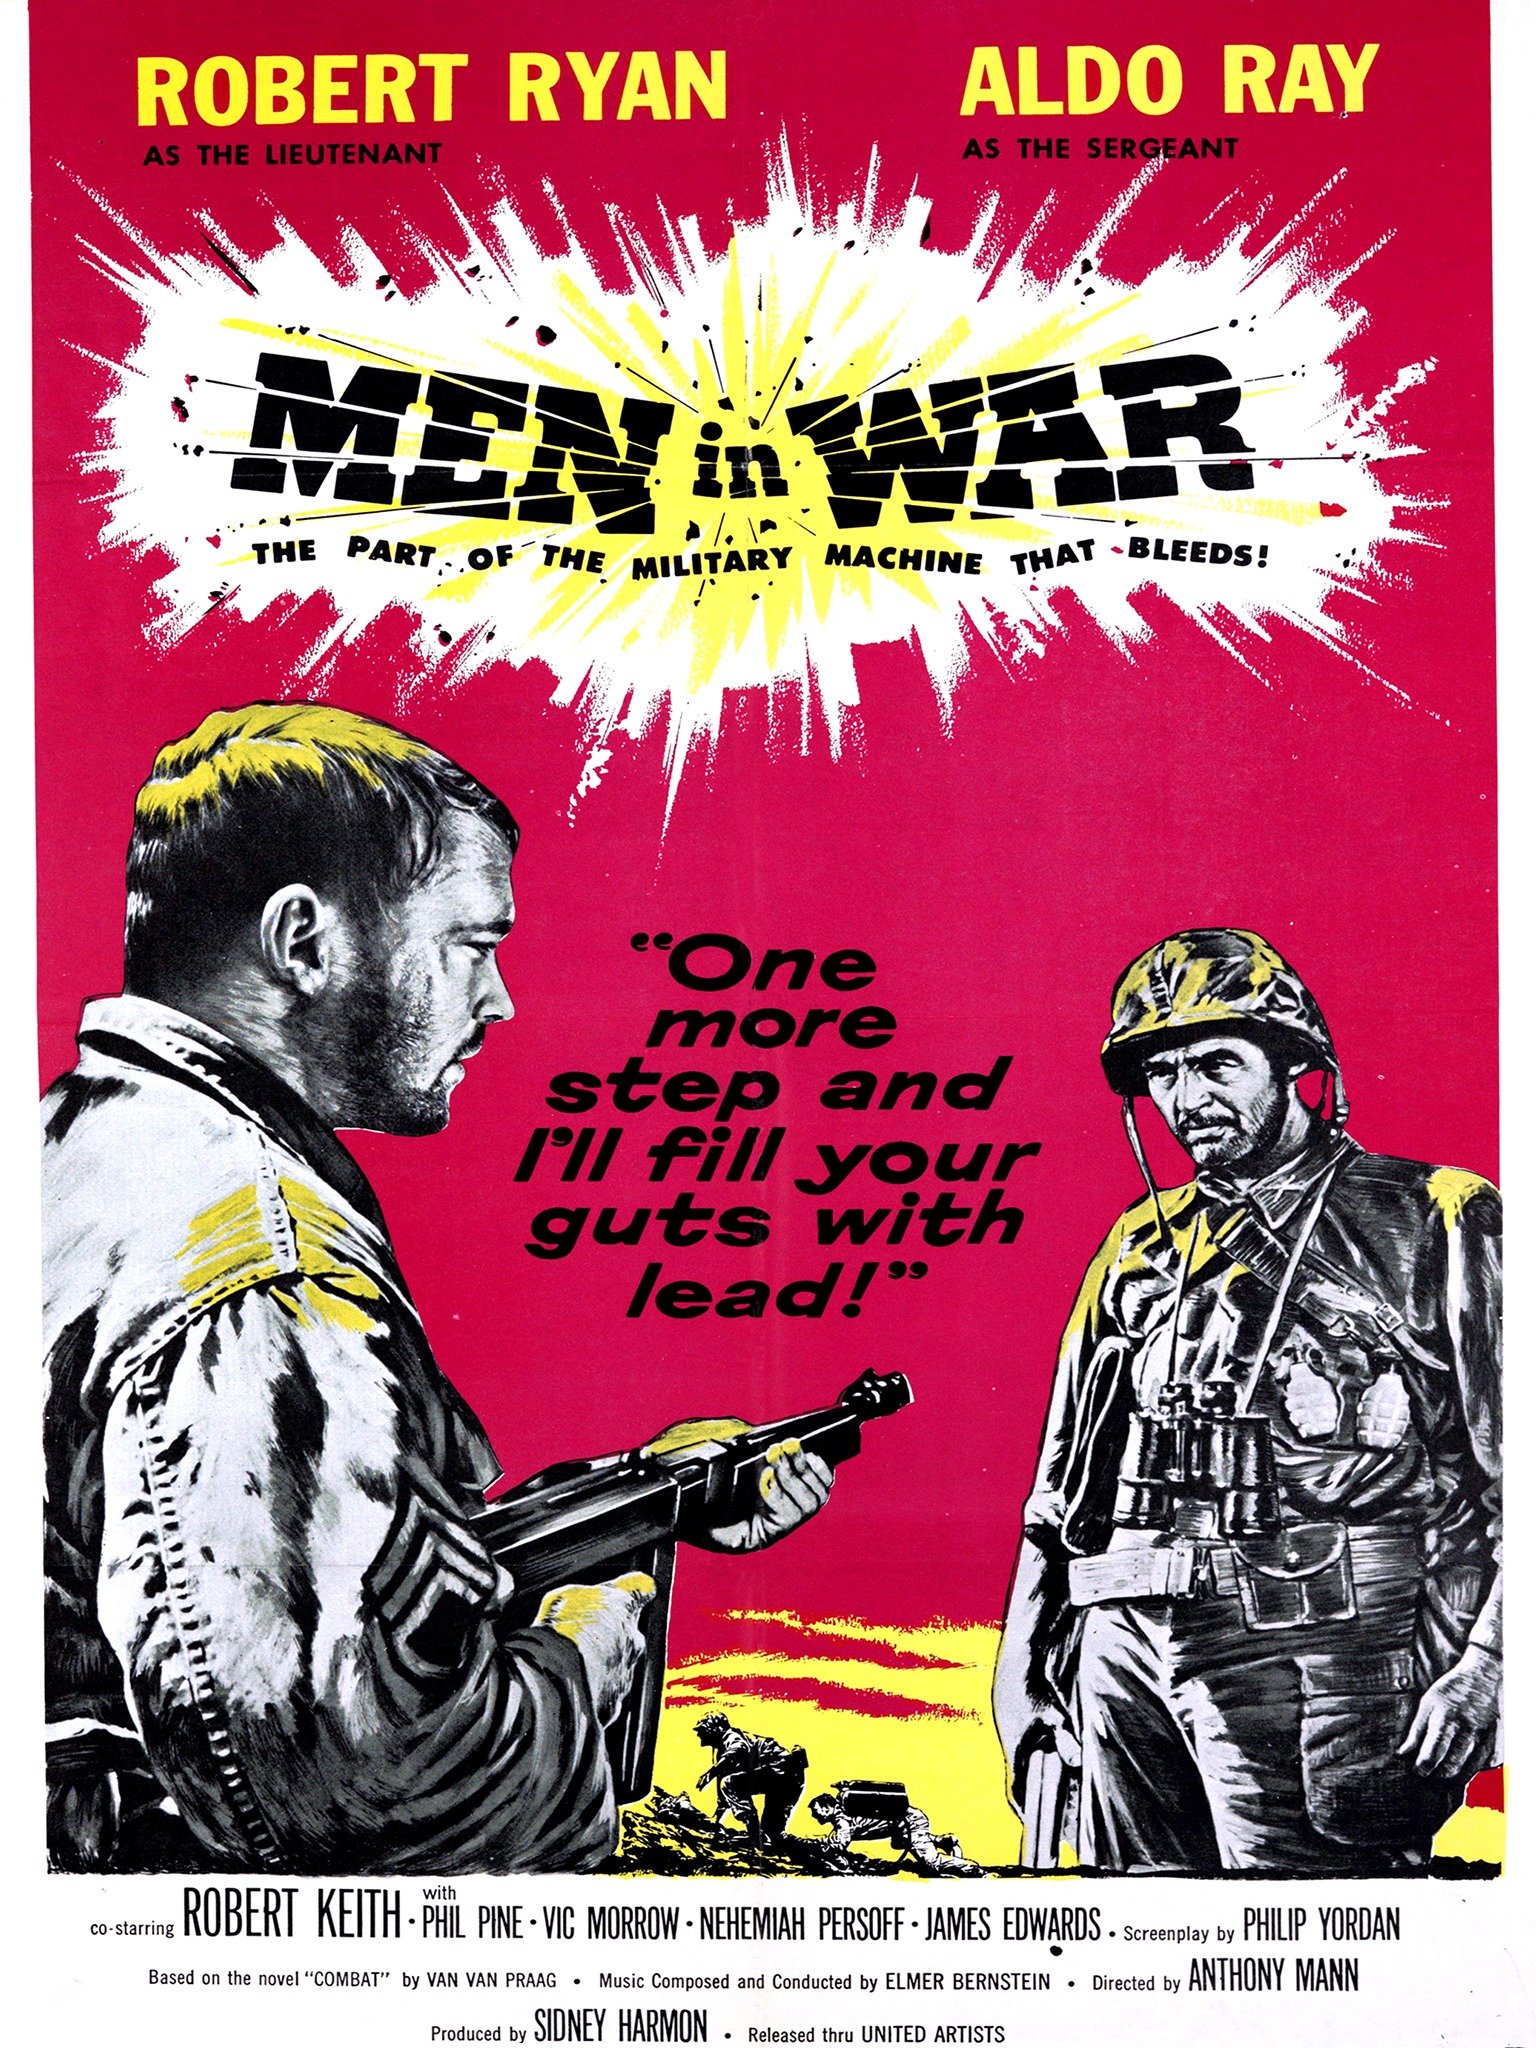 men of war 2 review